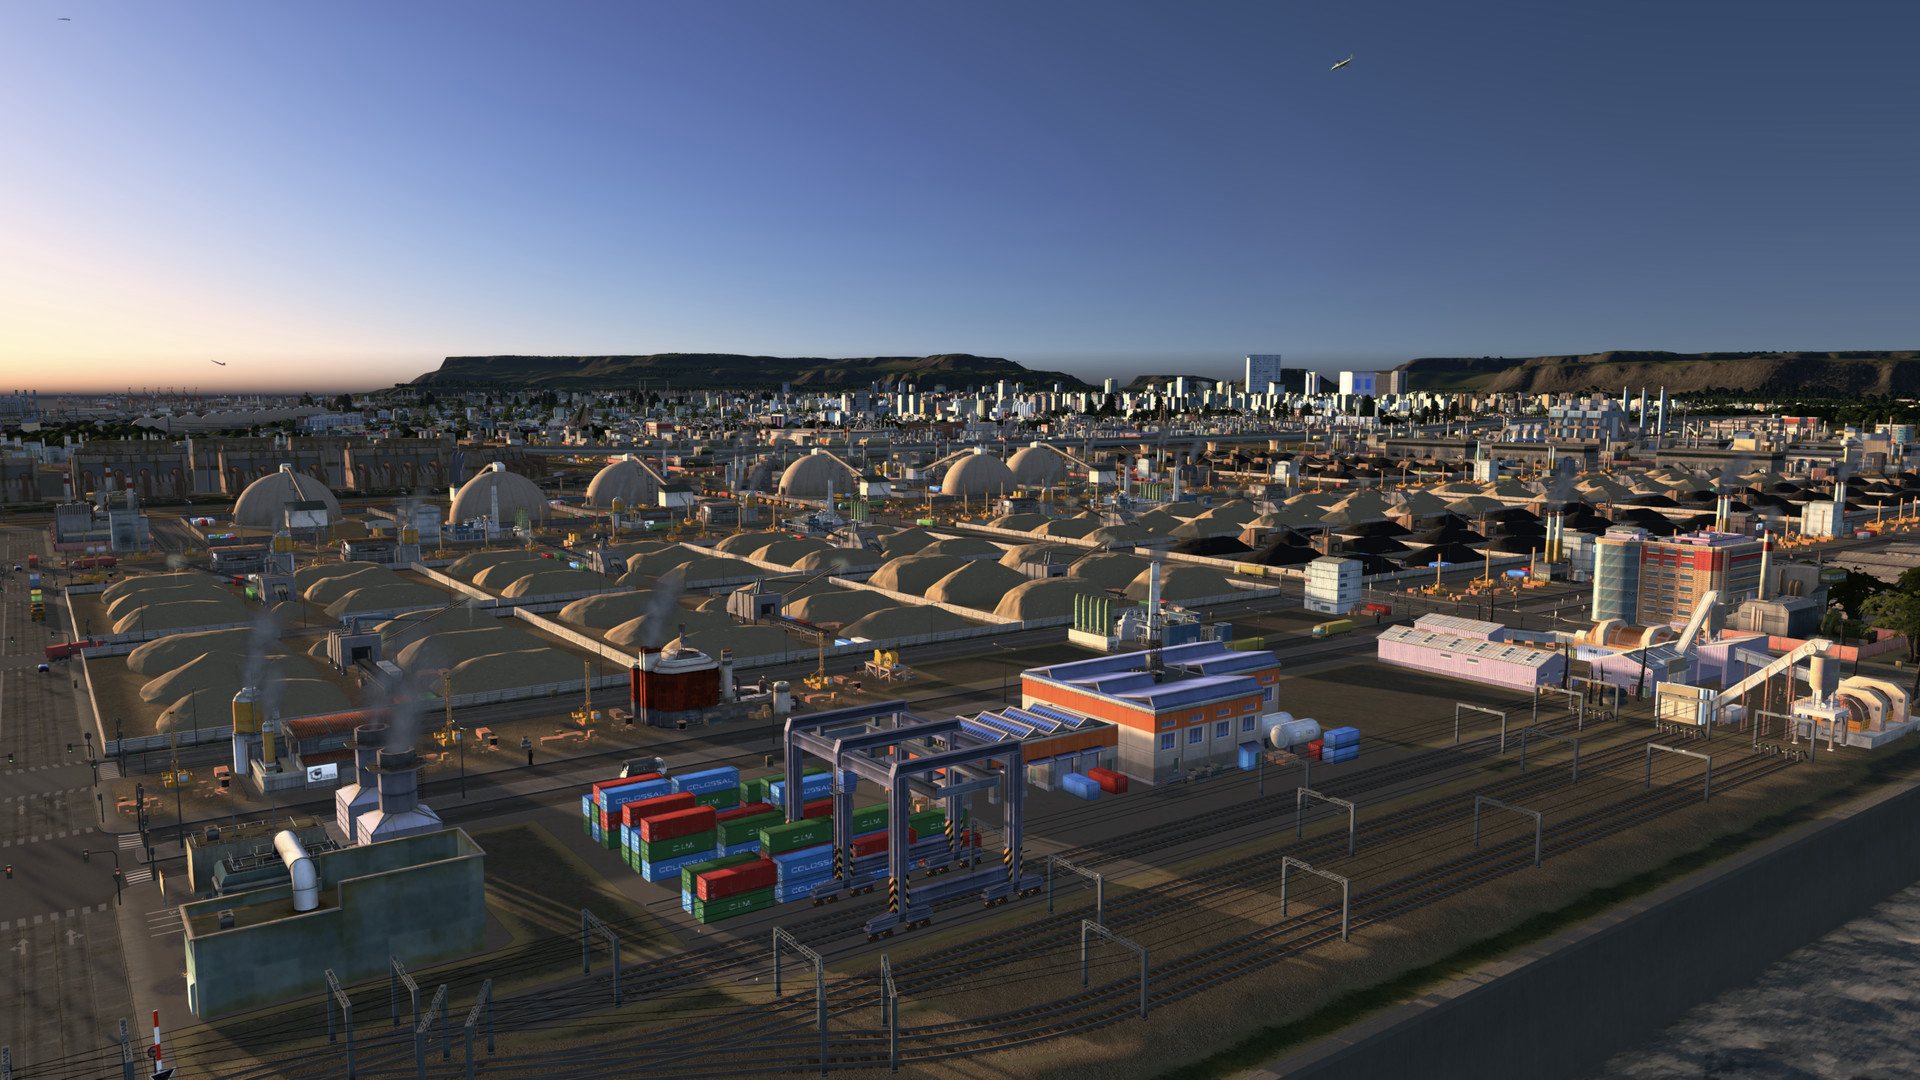 Cities: Skylines - Industries Plus DLC Steam CD Key